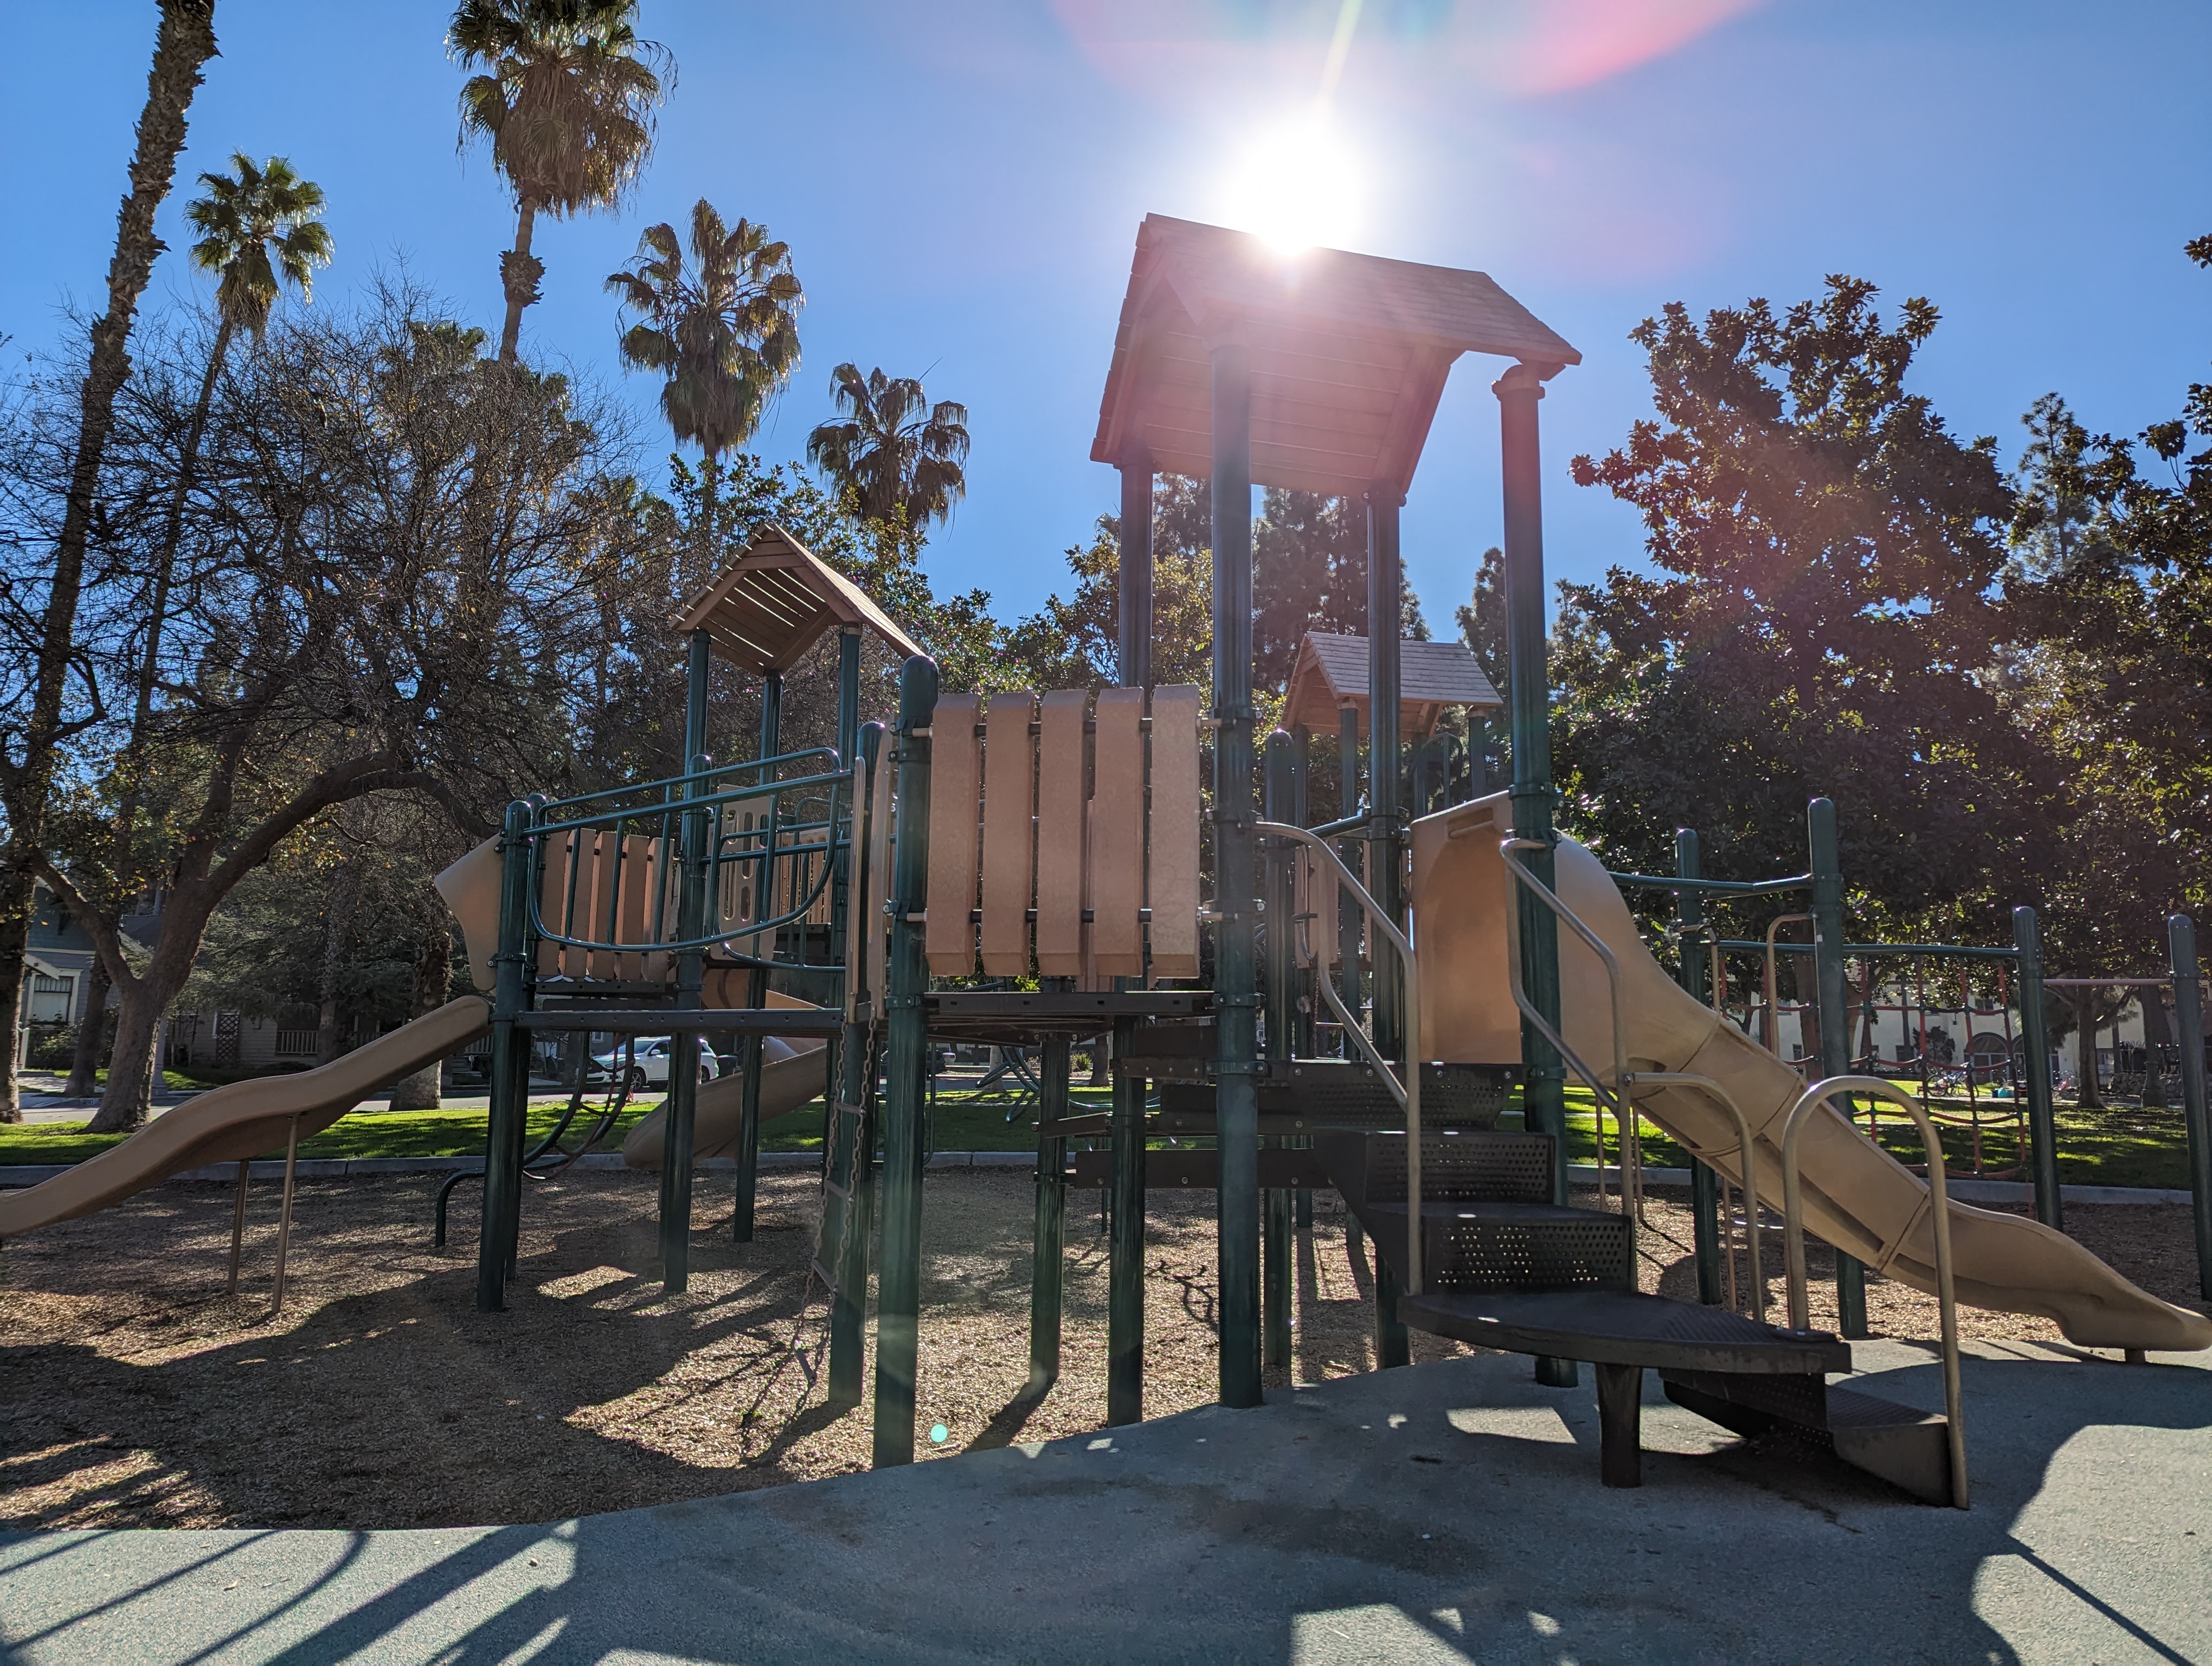 Park playground taken with Pixel 7